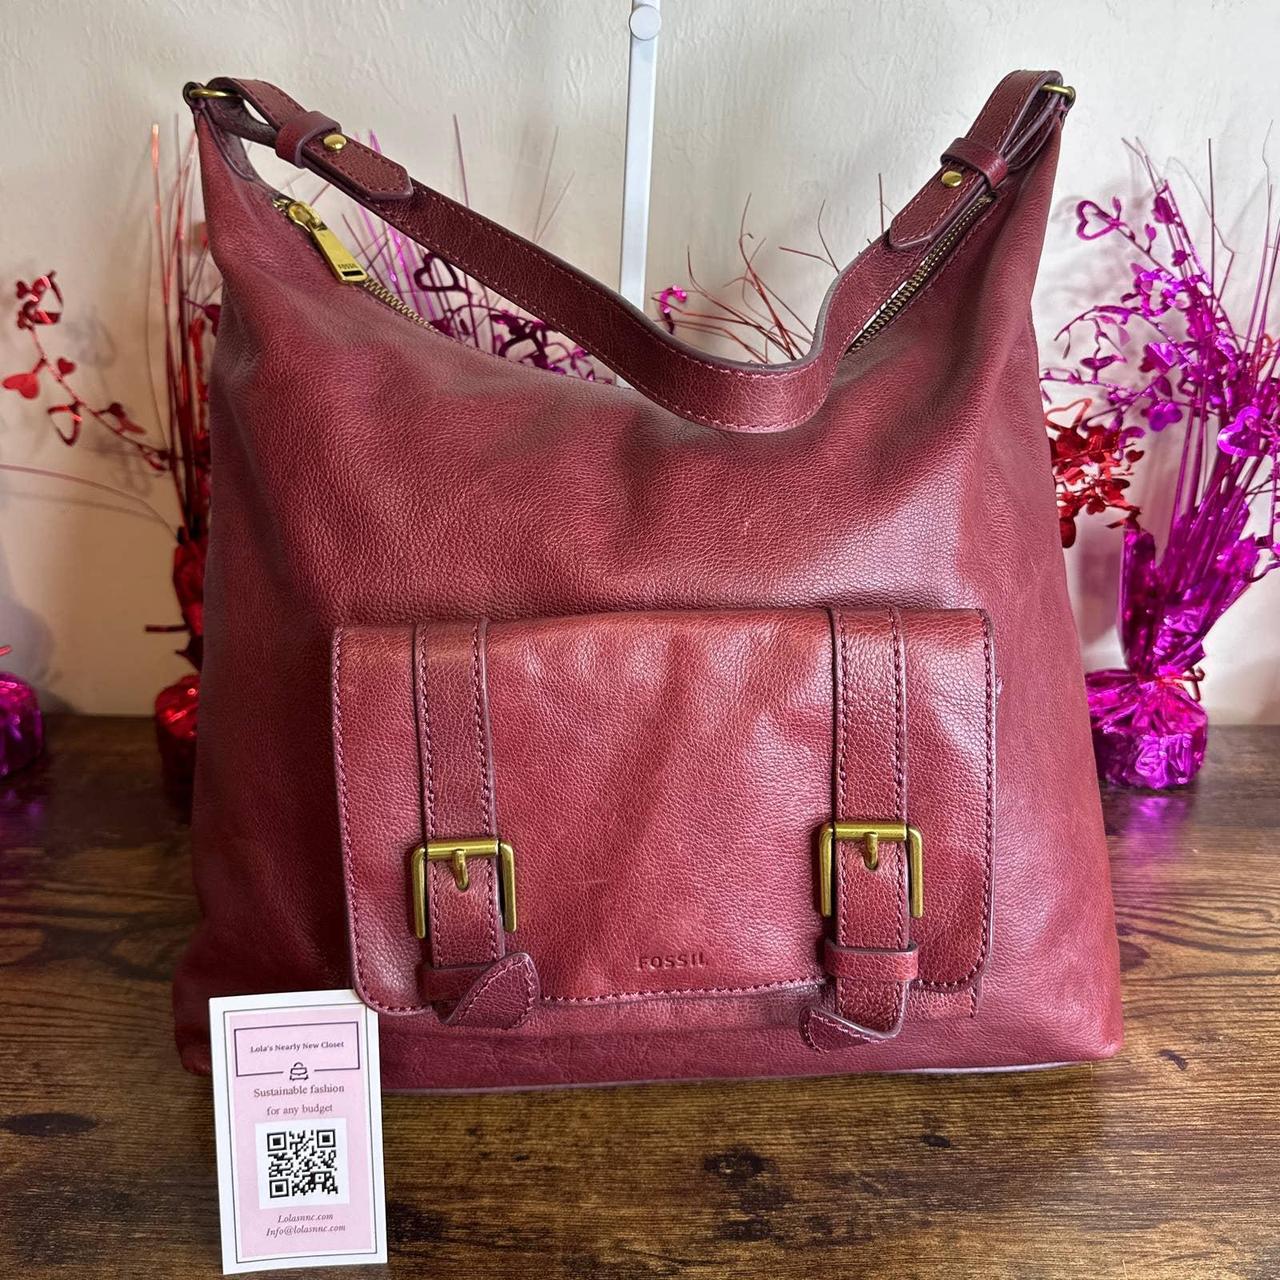 Buy Black Handbags for Women by Fossil Online | Ajio.com